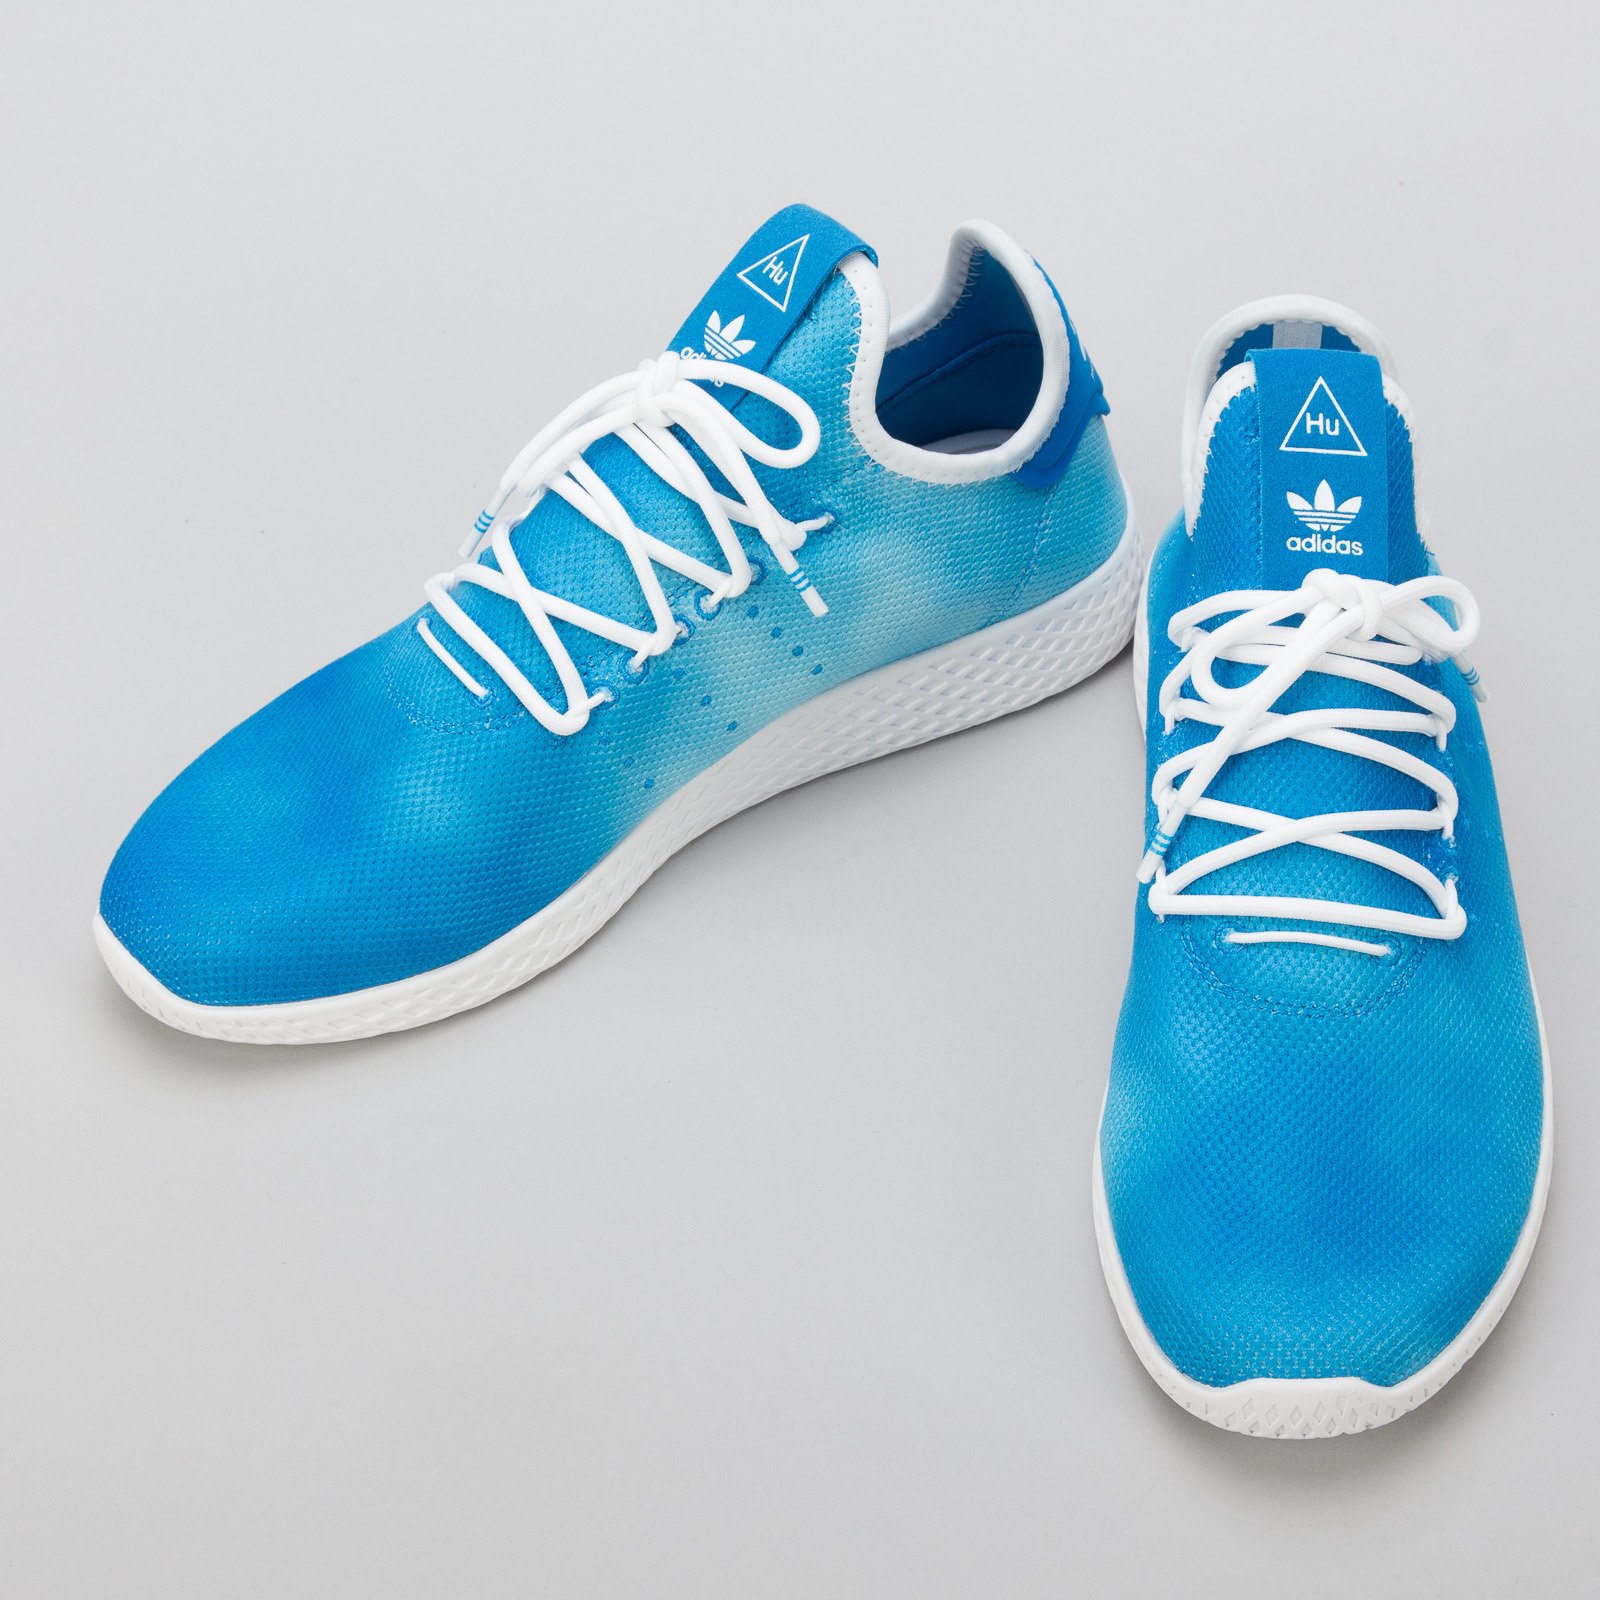 Adidas Pharrell Williams HU Holi Tennis Shoes, Blue/White, Men's 9